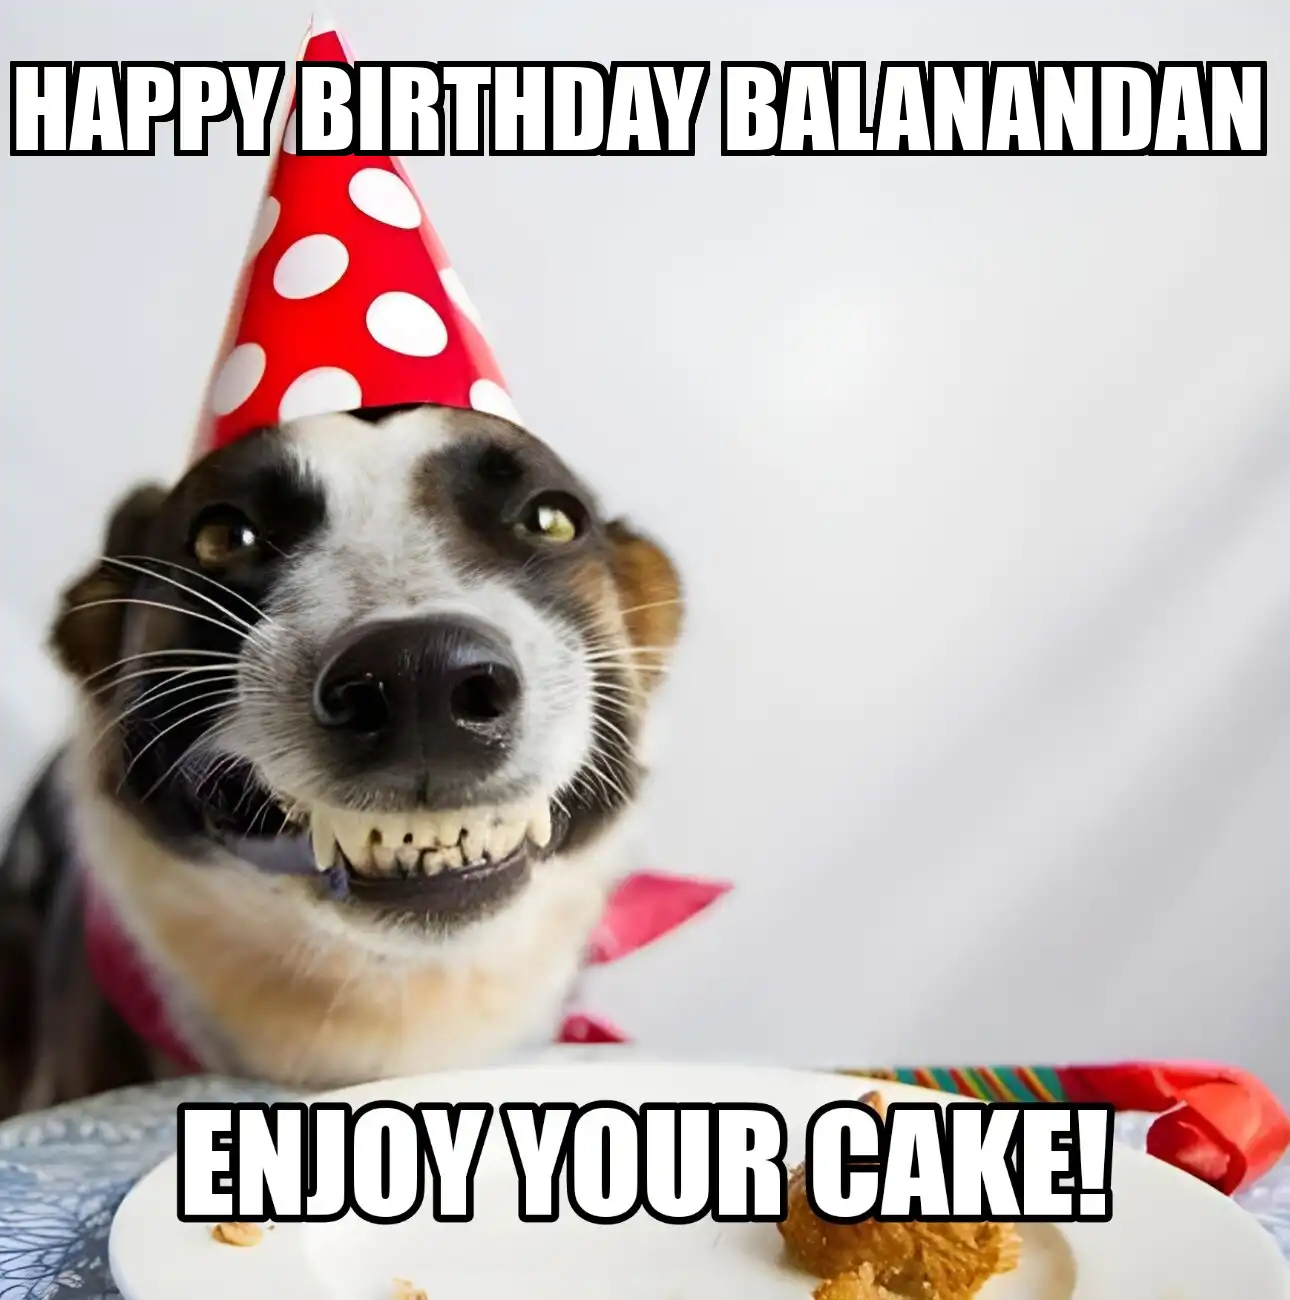 Happy Birthday Balanandan Enjoy Your Cake Dog Meme